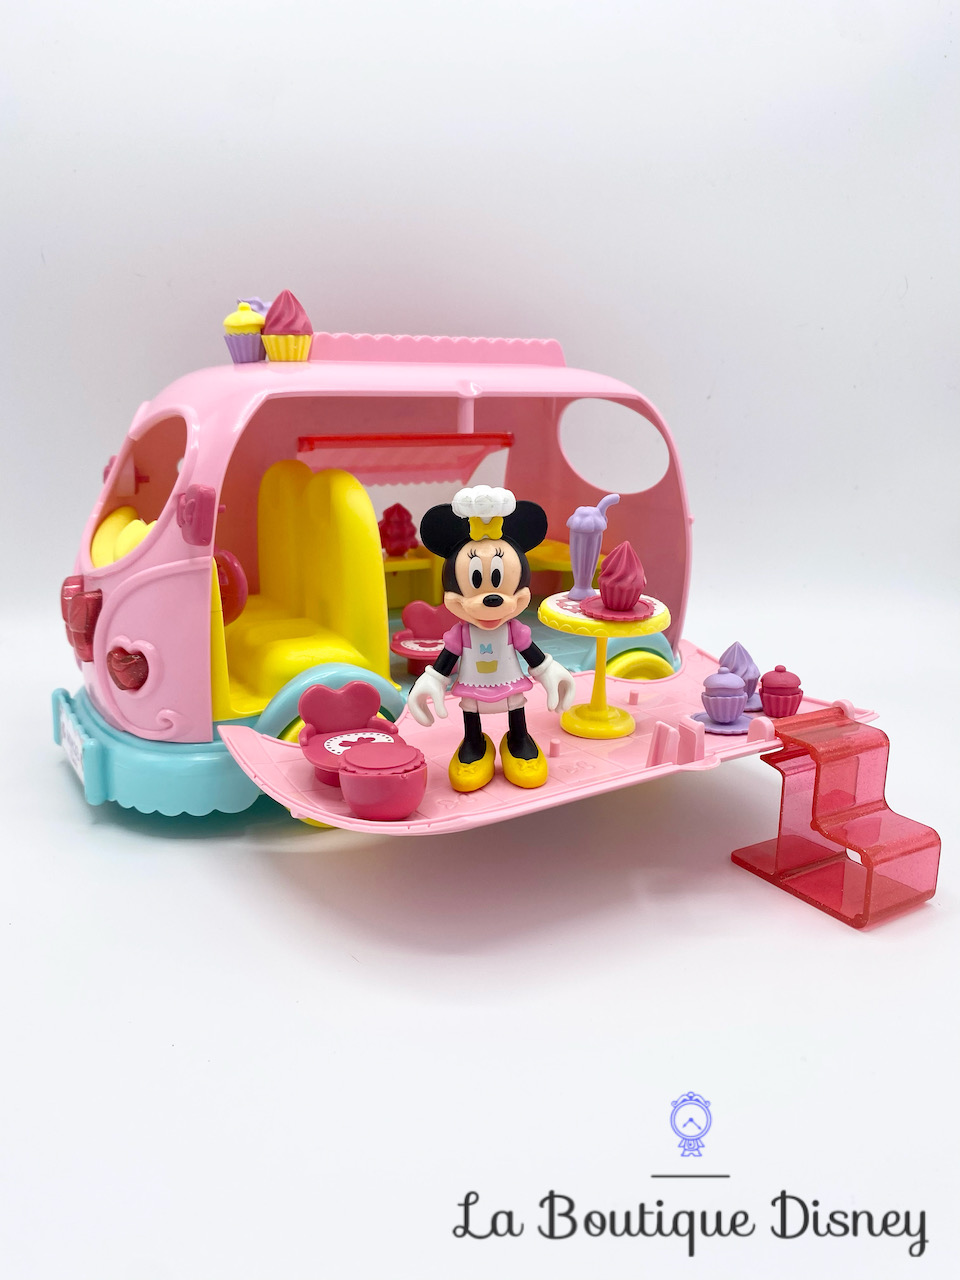 IMC Toys Minnie - Maison De Minnie